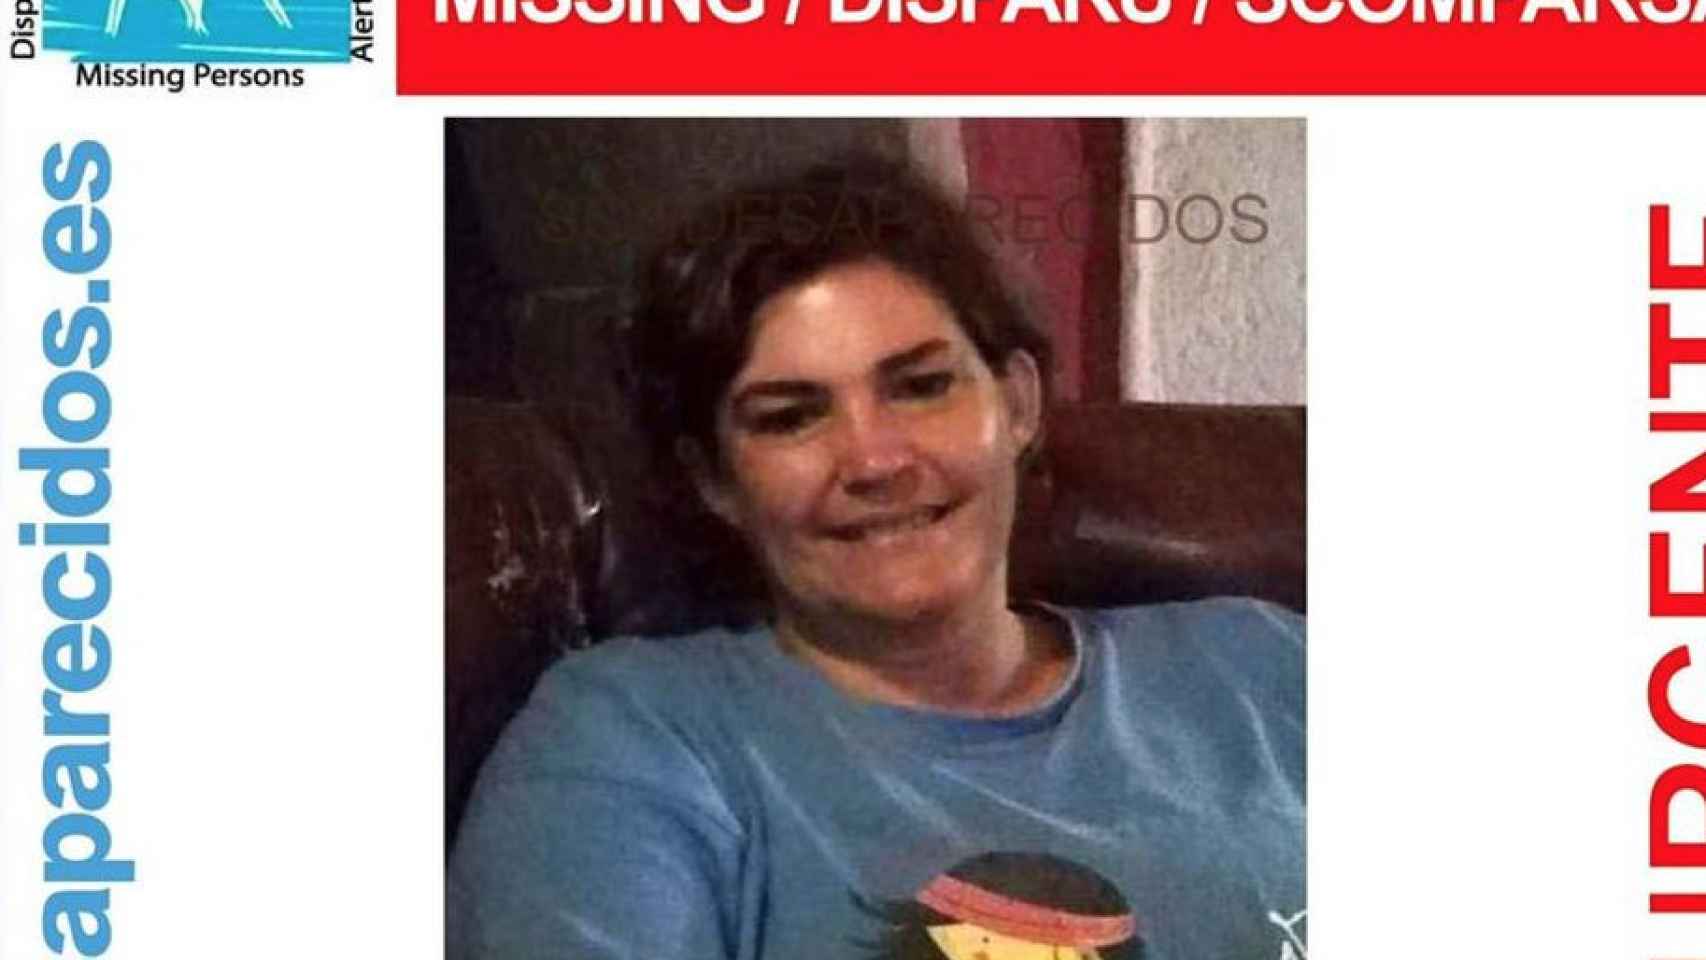 Mónica Borràs, la mujer que desapareció en Terrassa en 2018 / SOS DESAPARECIDOS